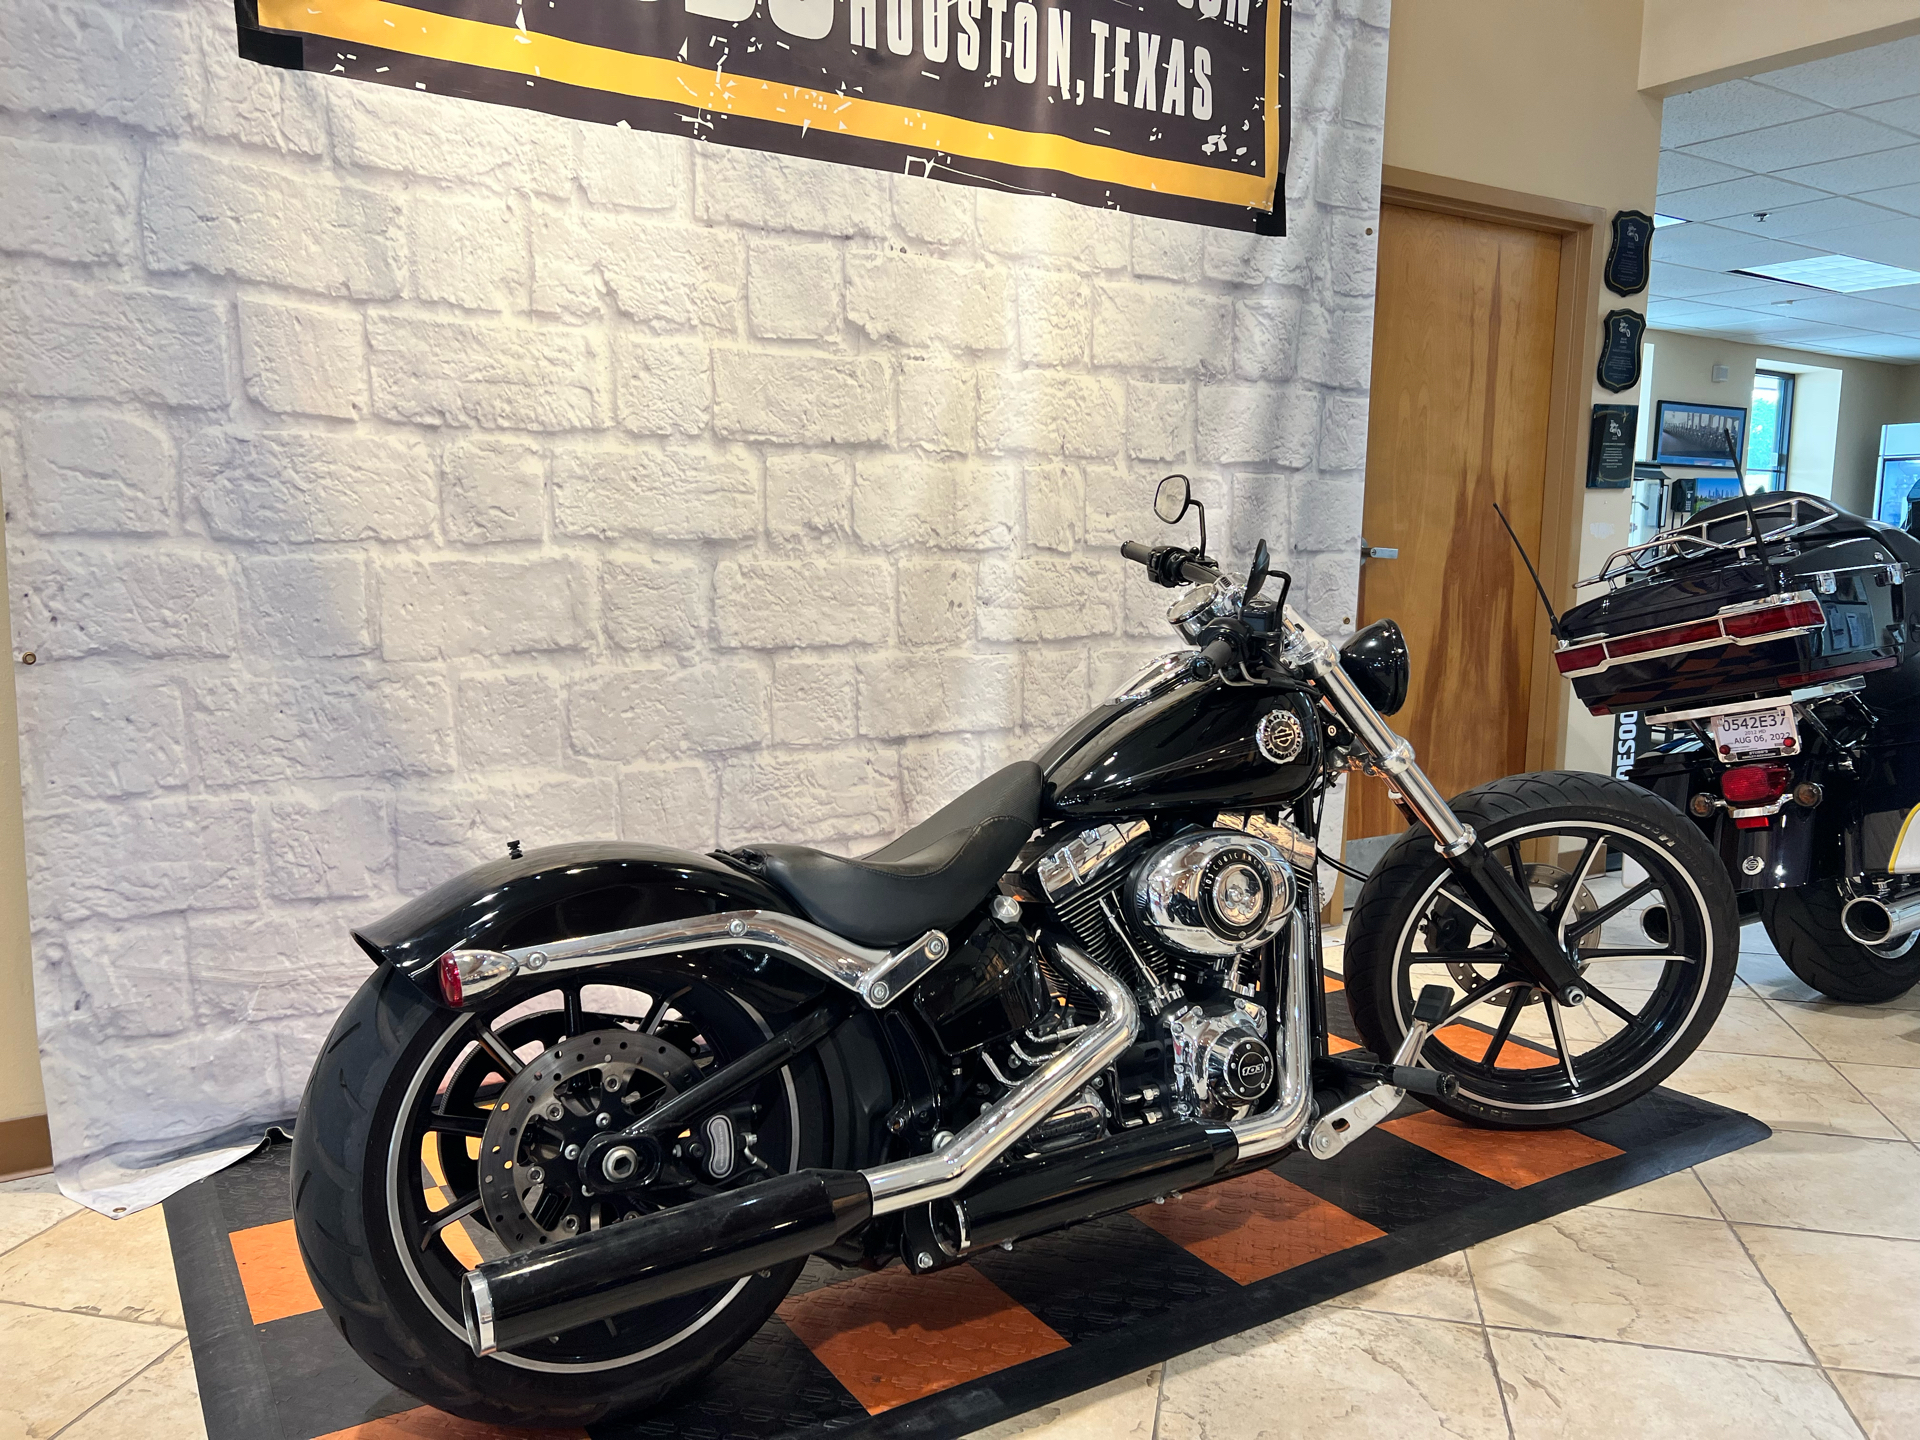 2014 Harley-Davidson Breakout® in Houston, Texas - Photo 2